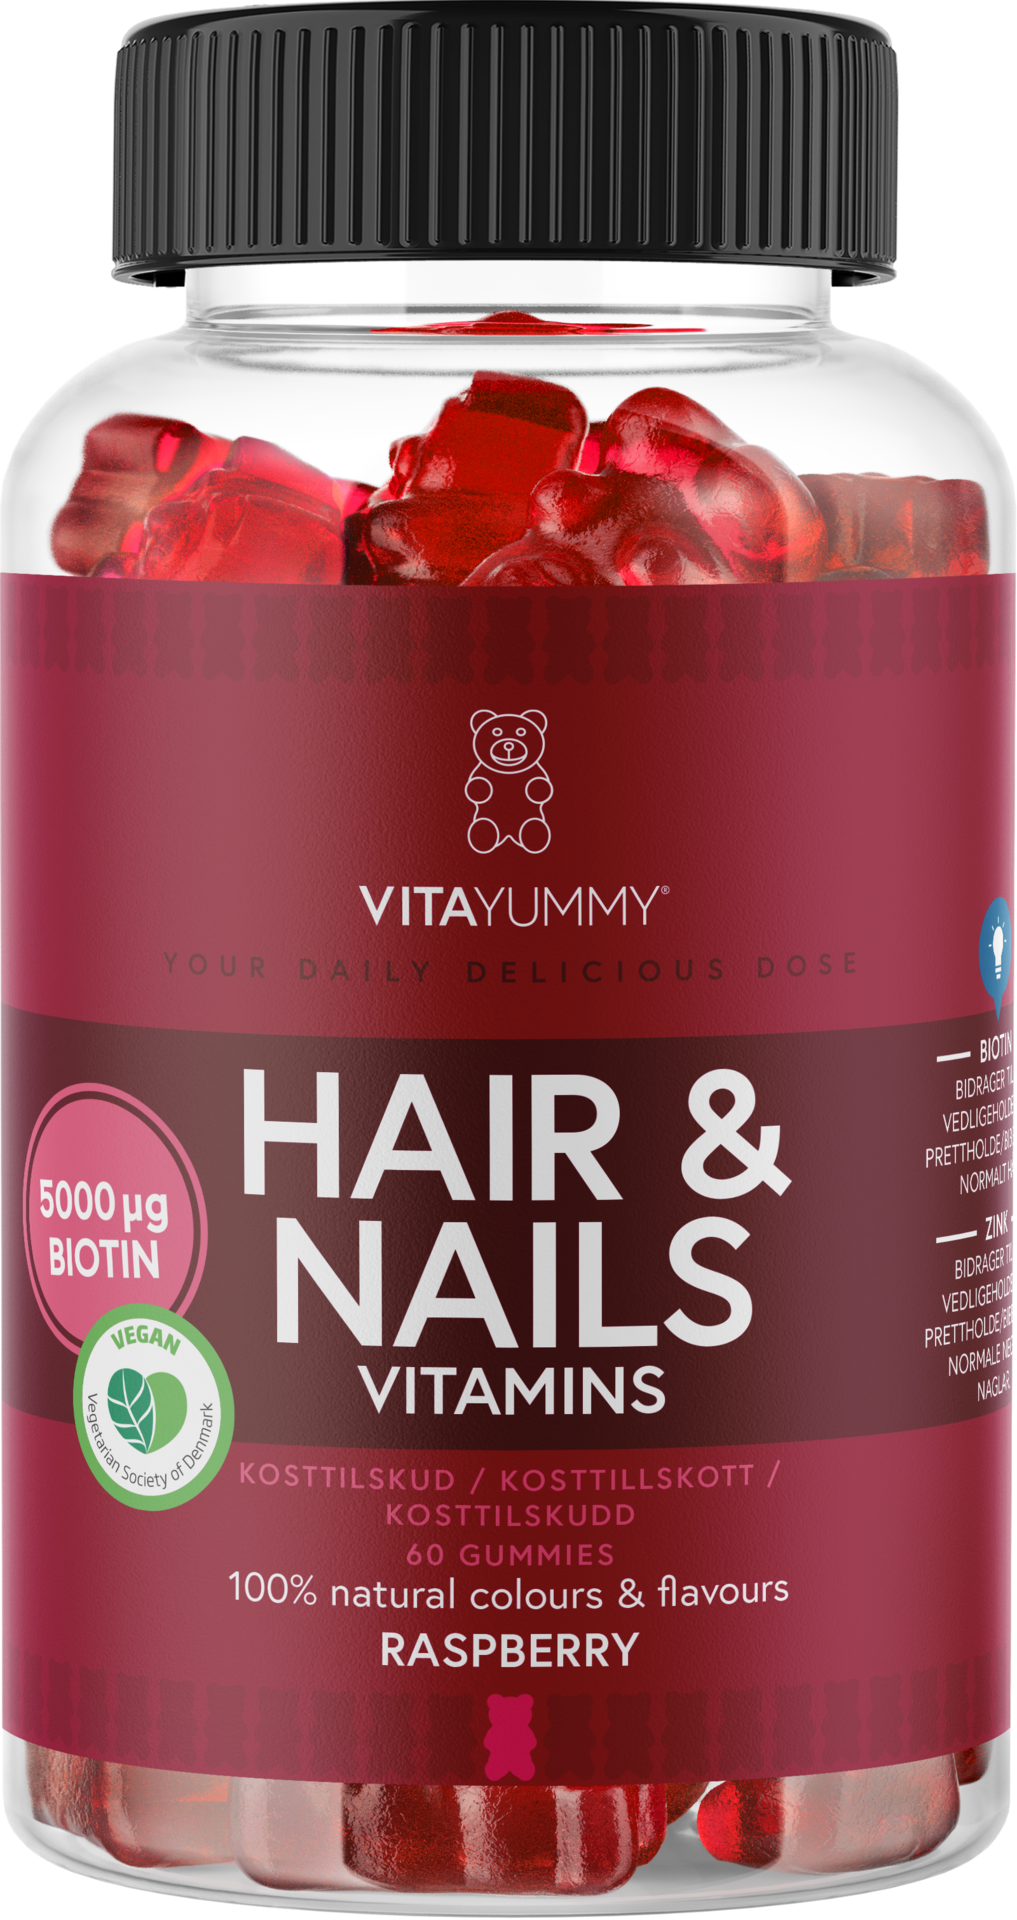 VitaYummy Hair & Nails Vitamins Raspberry 60 tuggtabletter